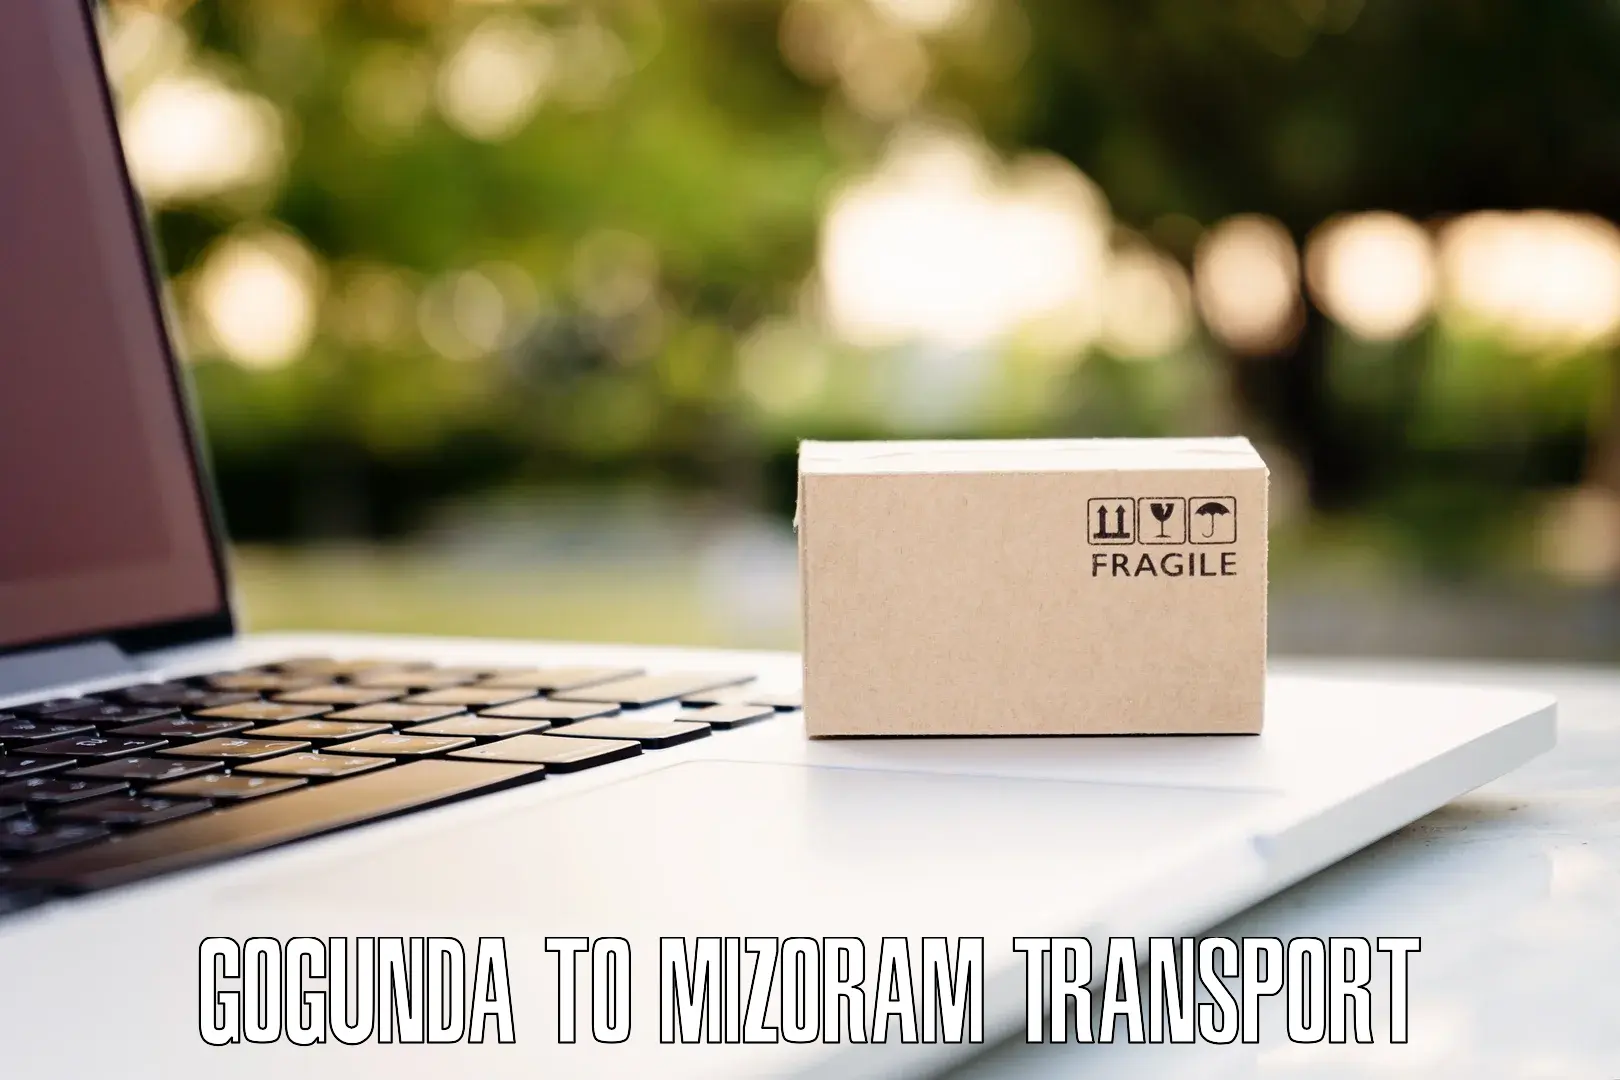 Daily transport service Gogunda to Mizoram